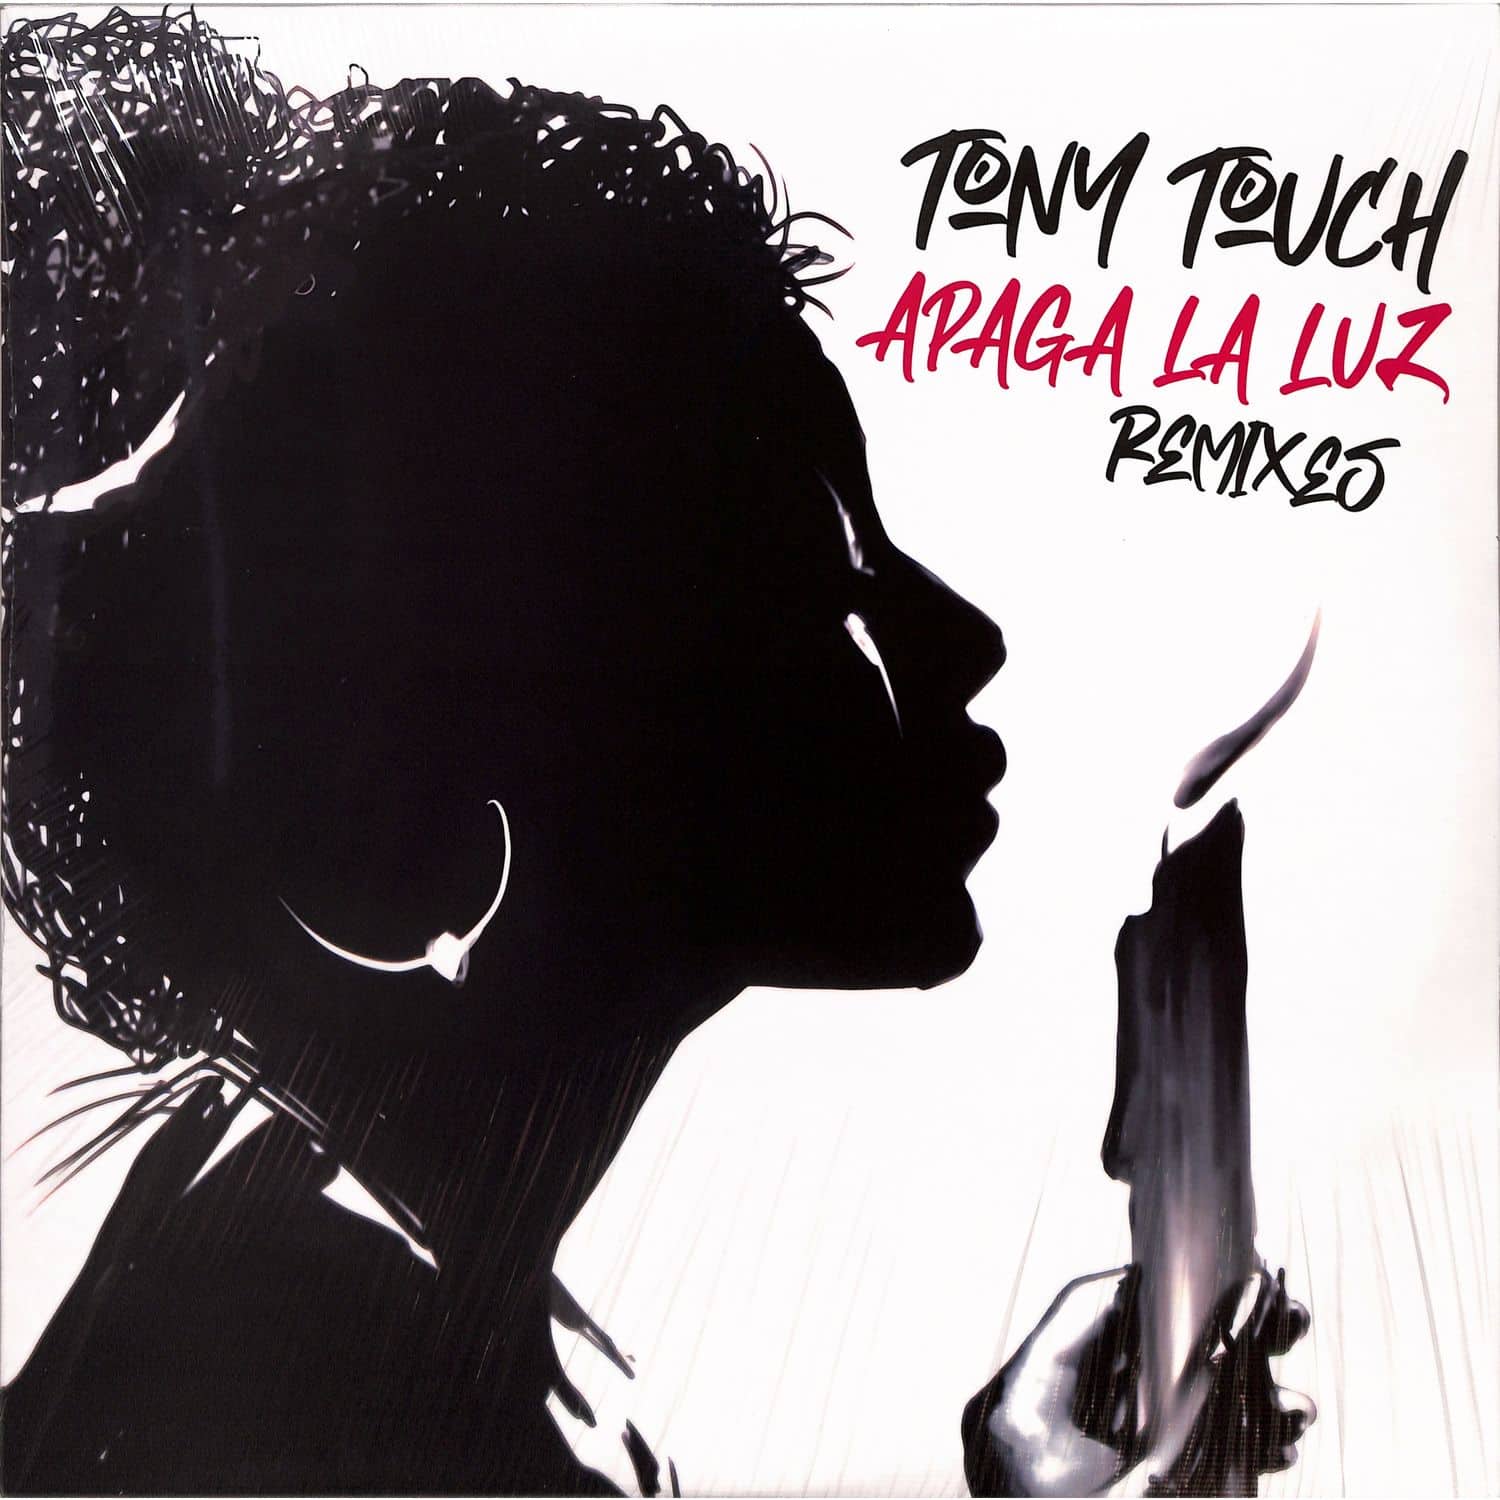 Tony Touch - APAGA LA LUZ 